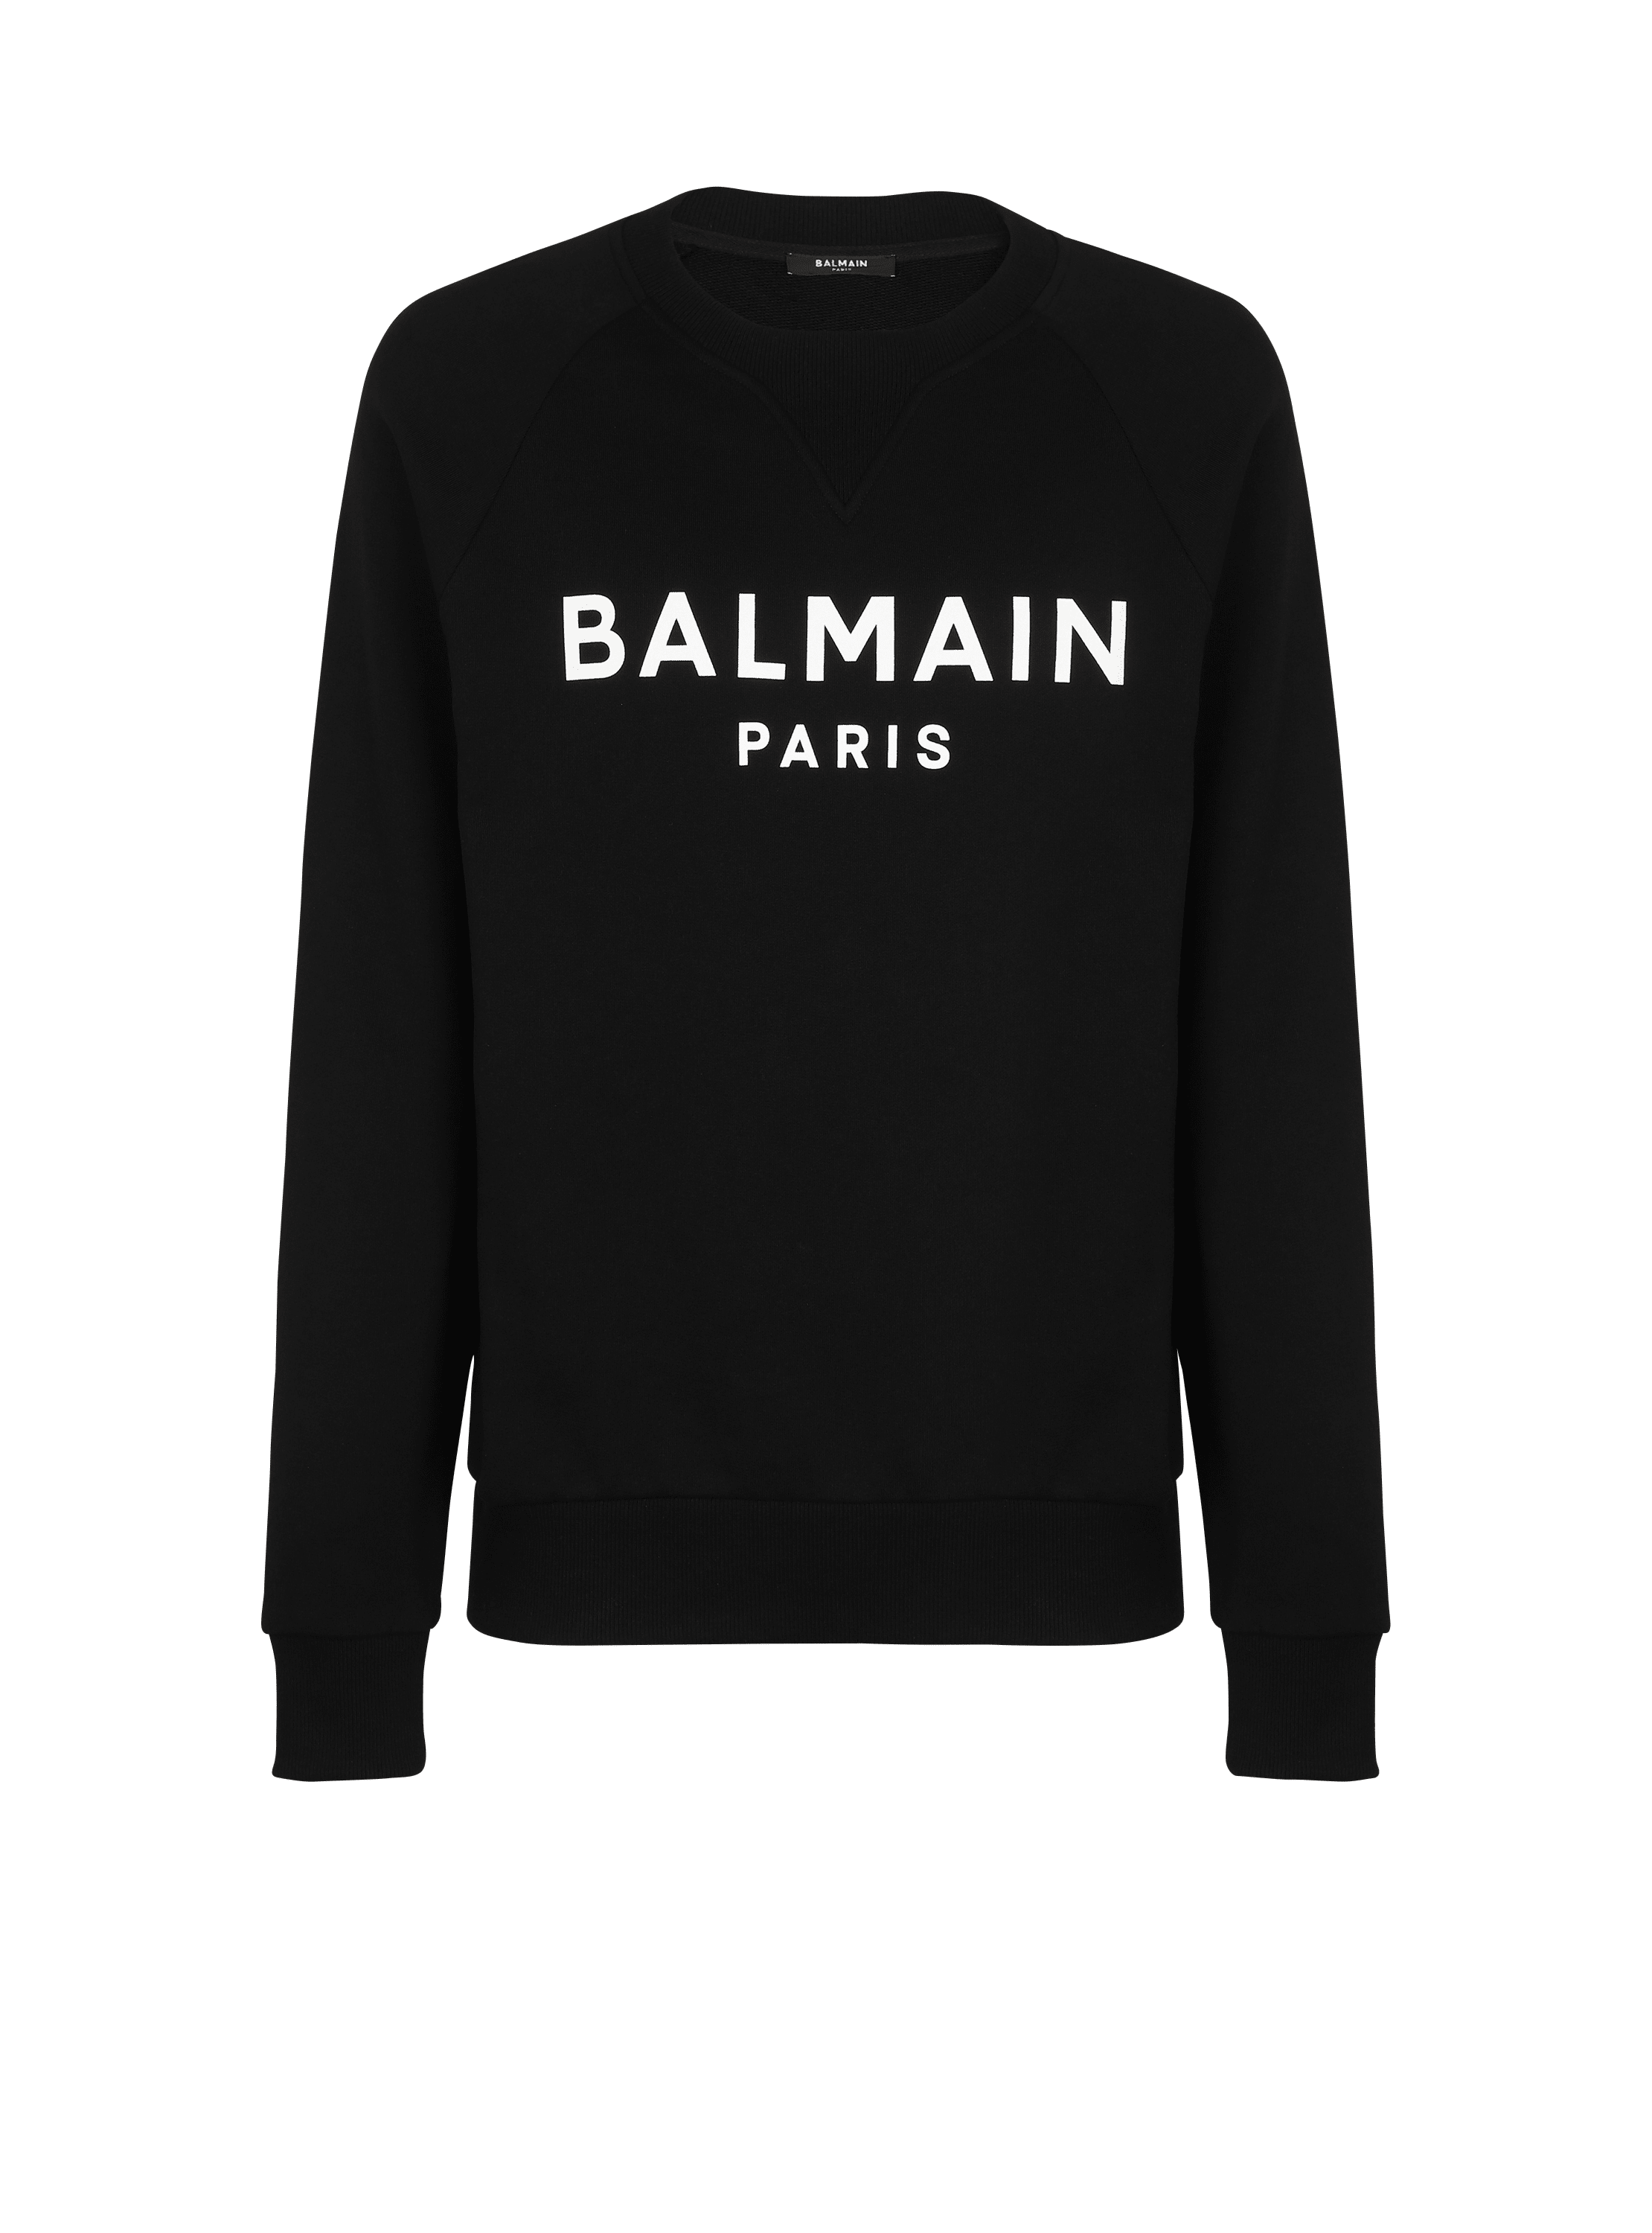 Sweat-shirt en coton imprimé logo Balmain, noir, hi-res